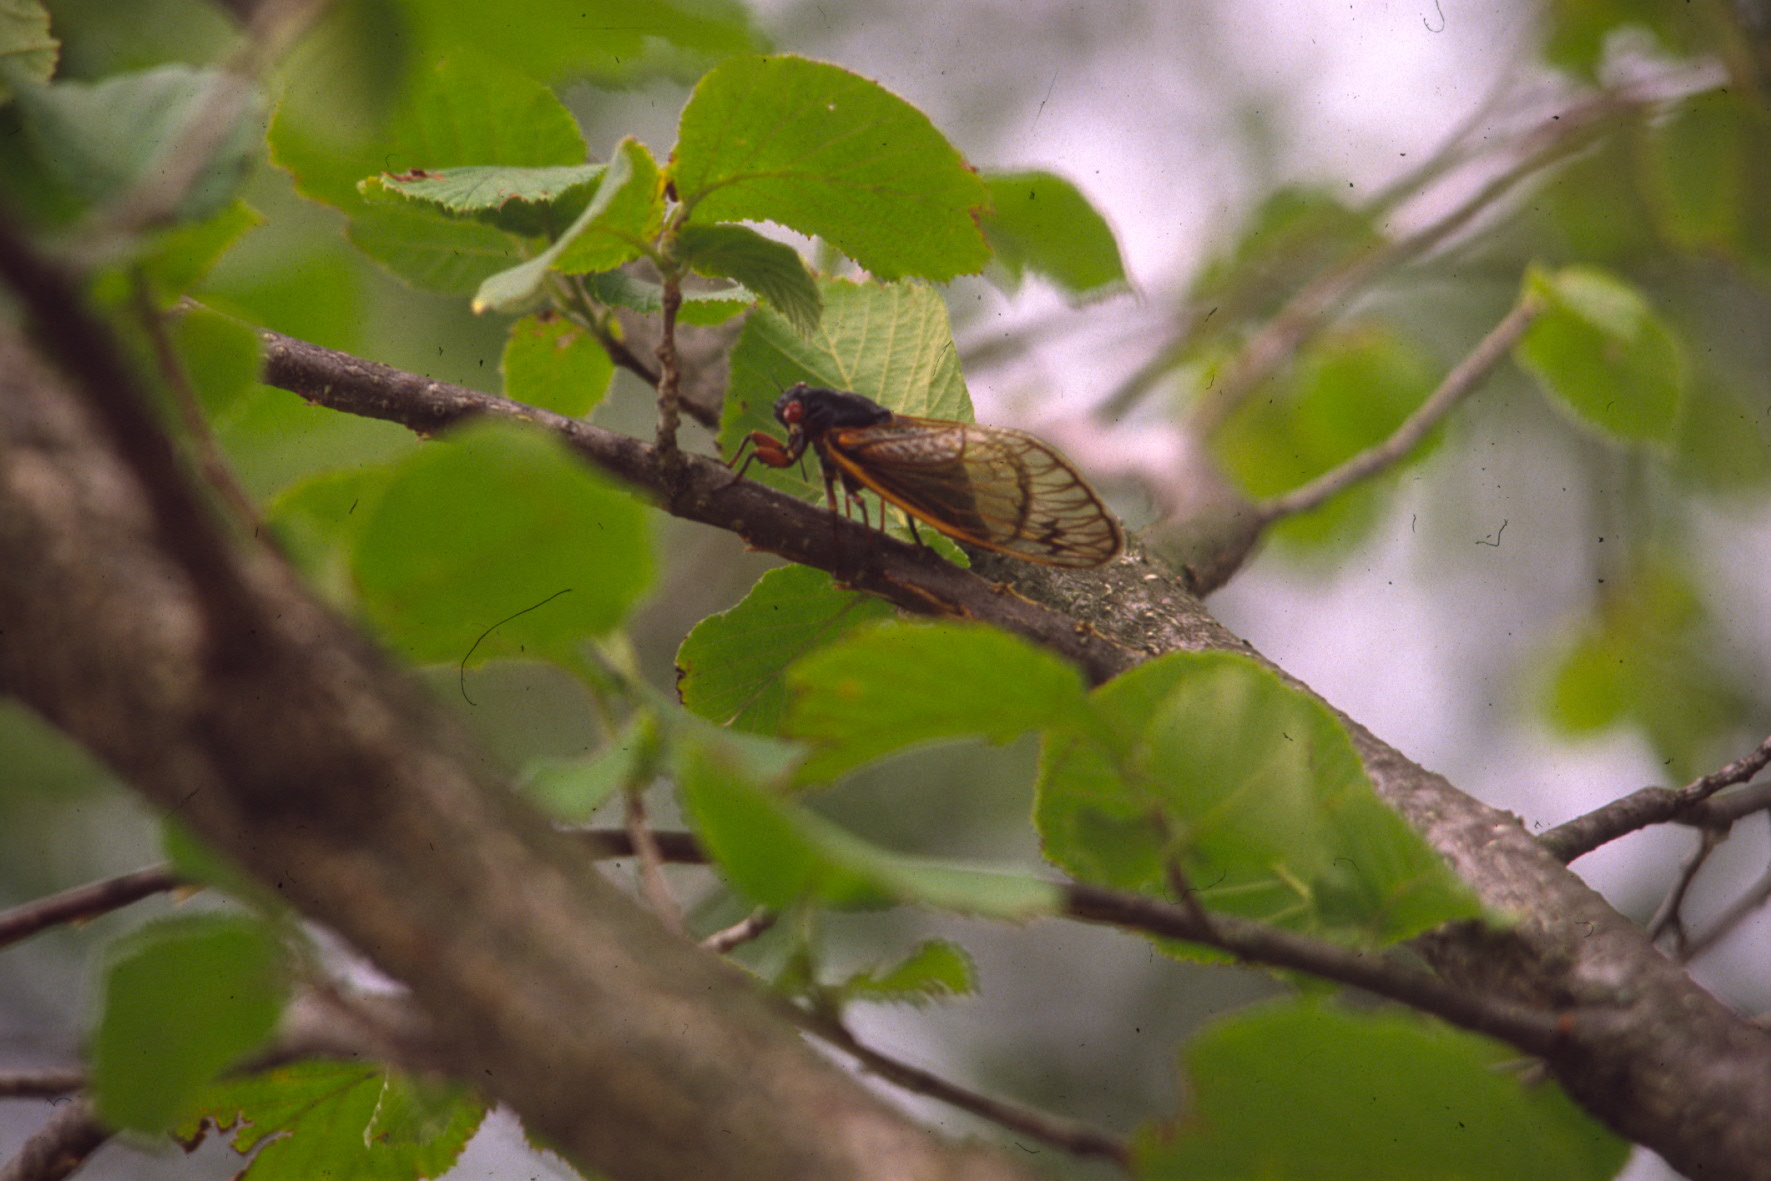 Cicada records help scientists study long-term health impact of pesticide exposure